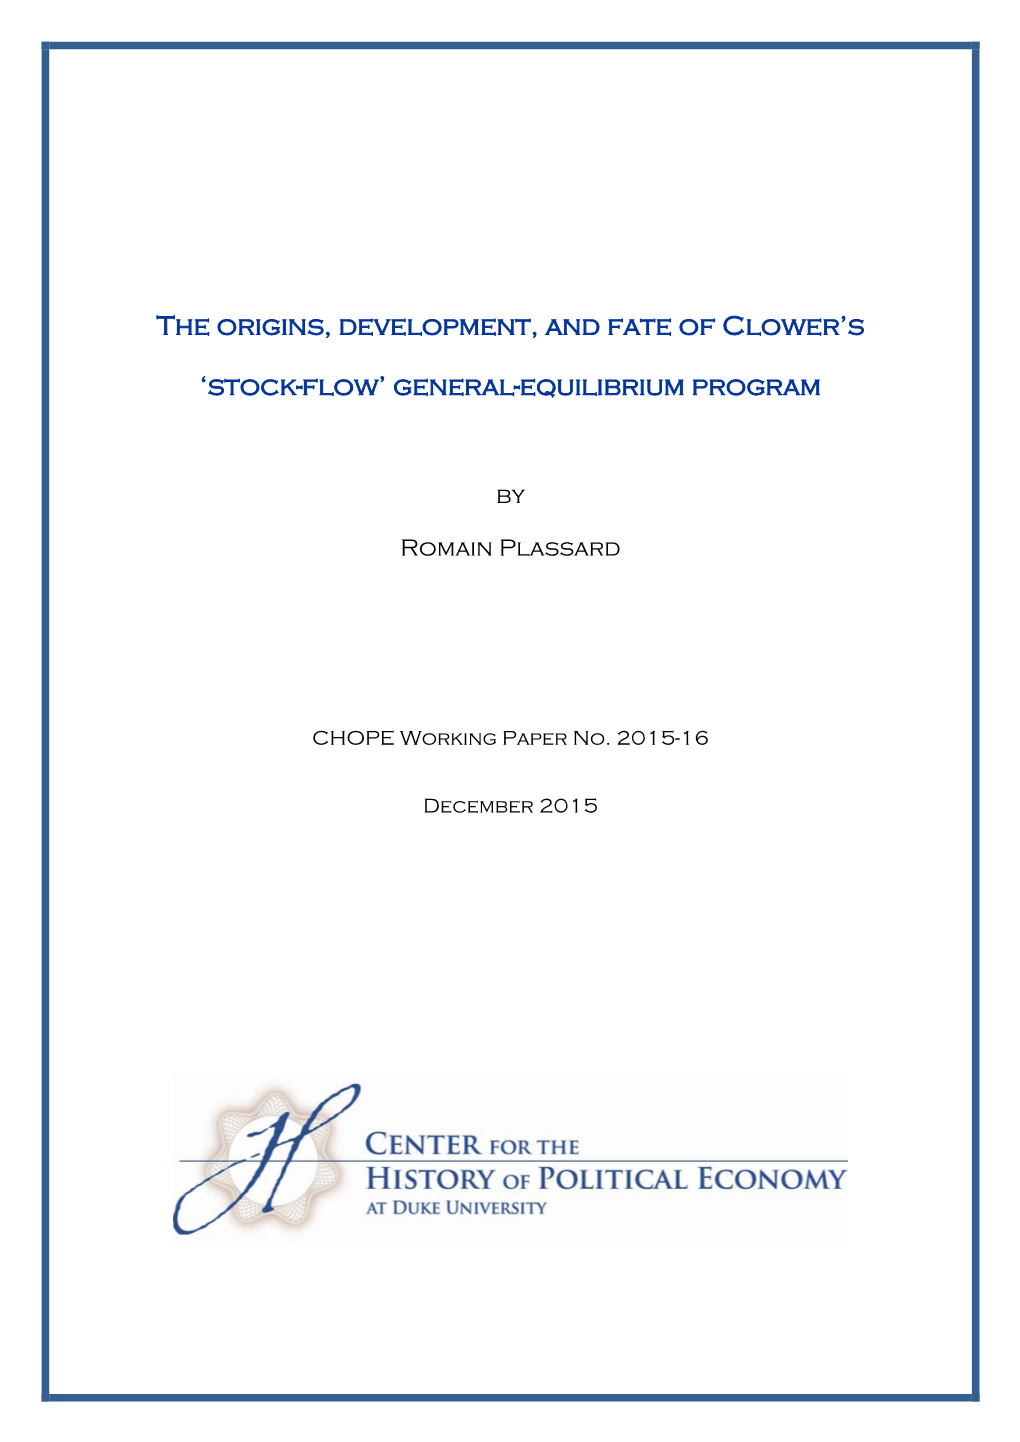 CHOPE Stock-Flow General-Equilibrium Program.Pdf